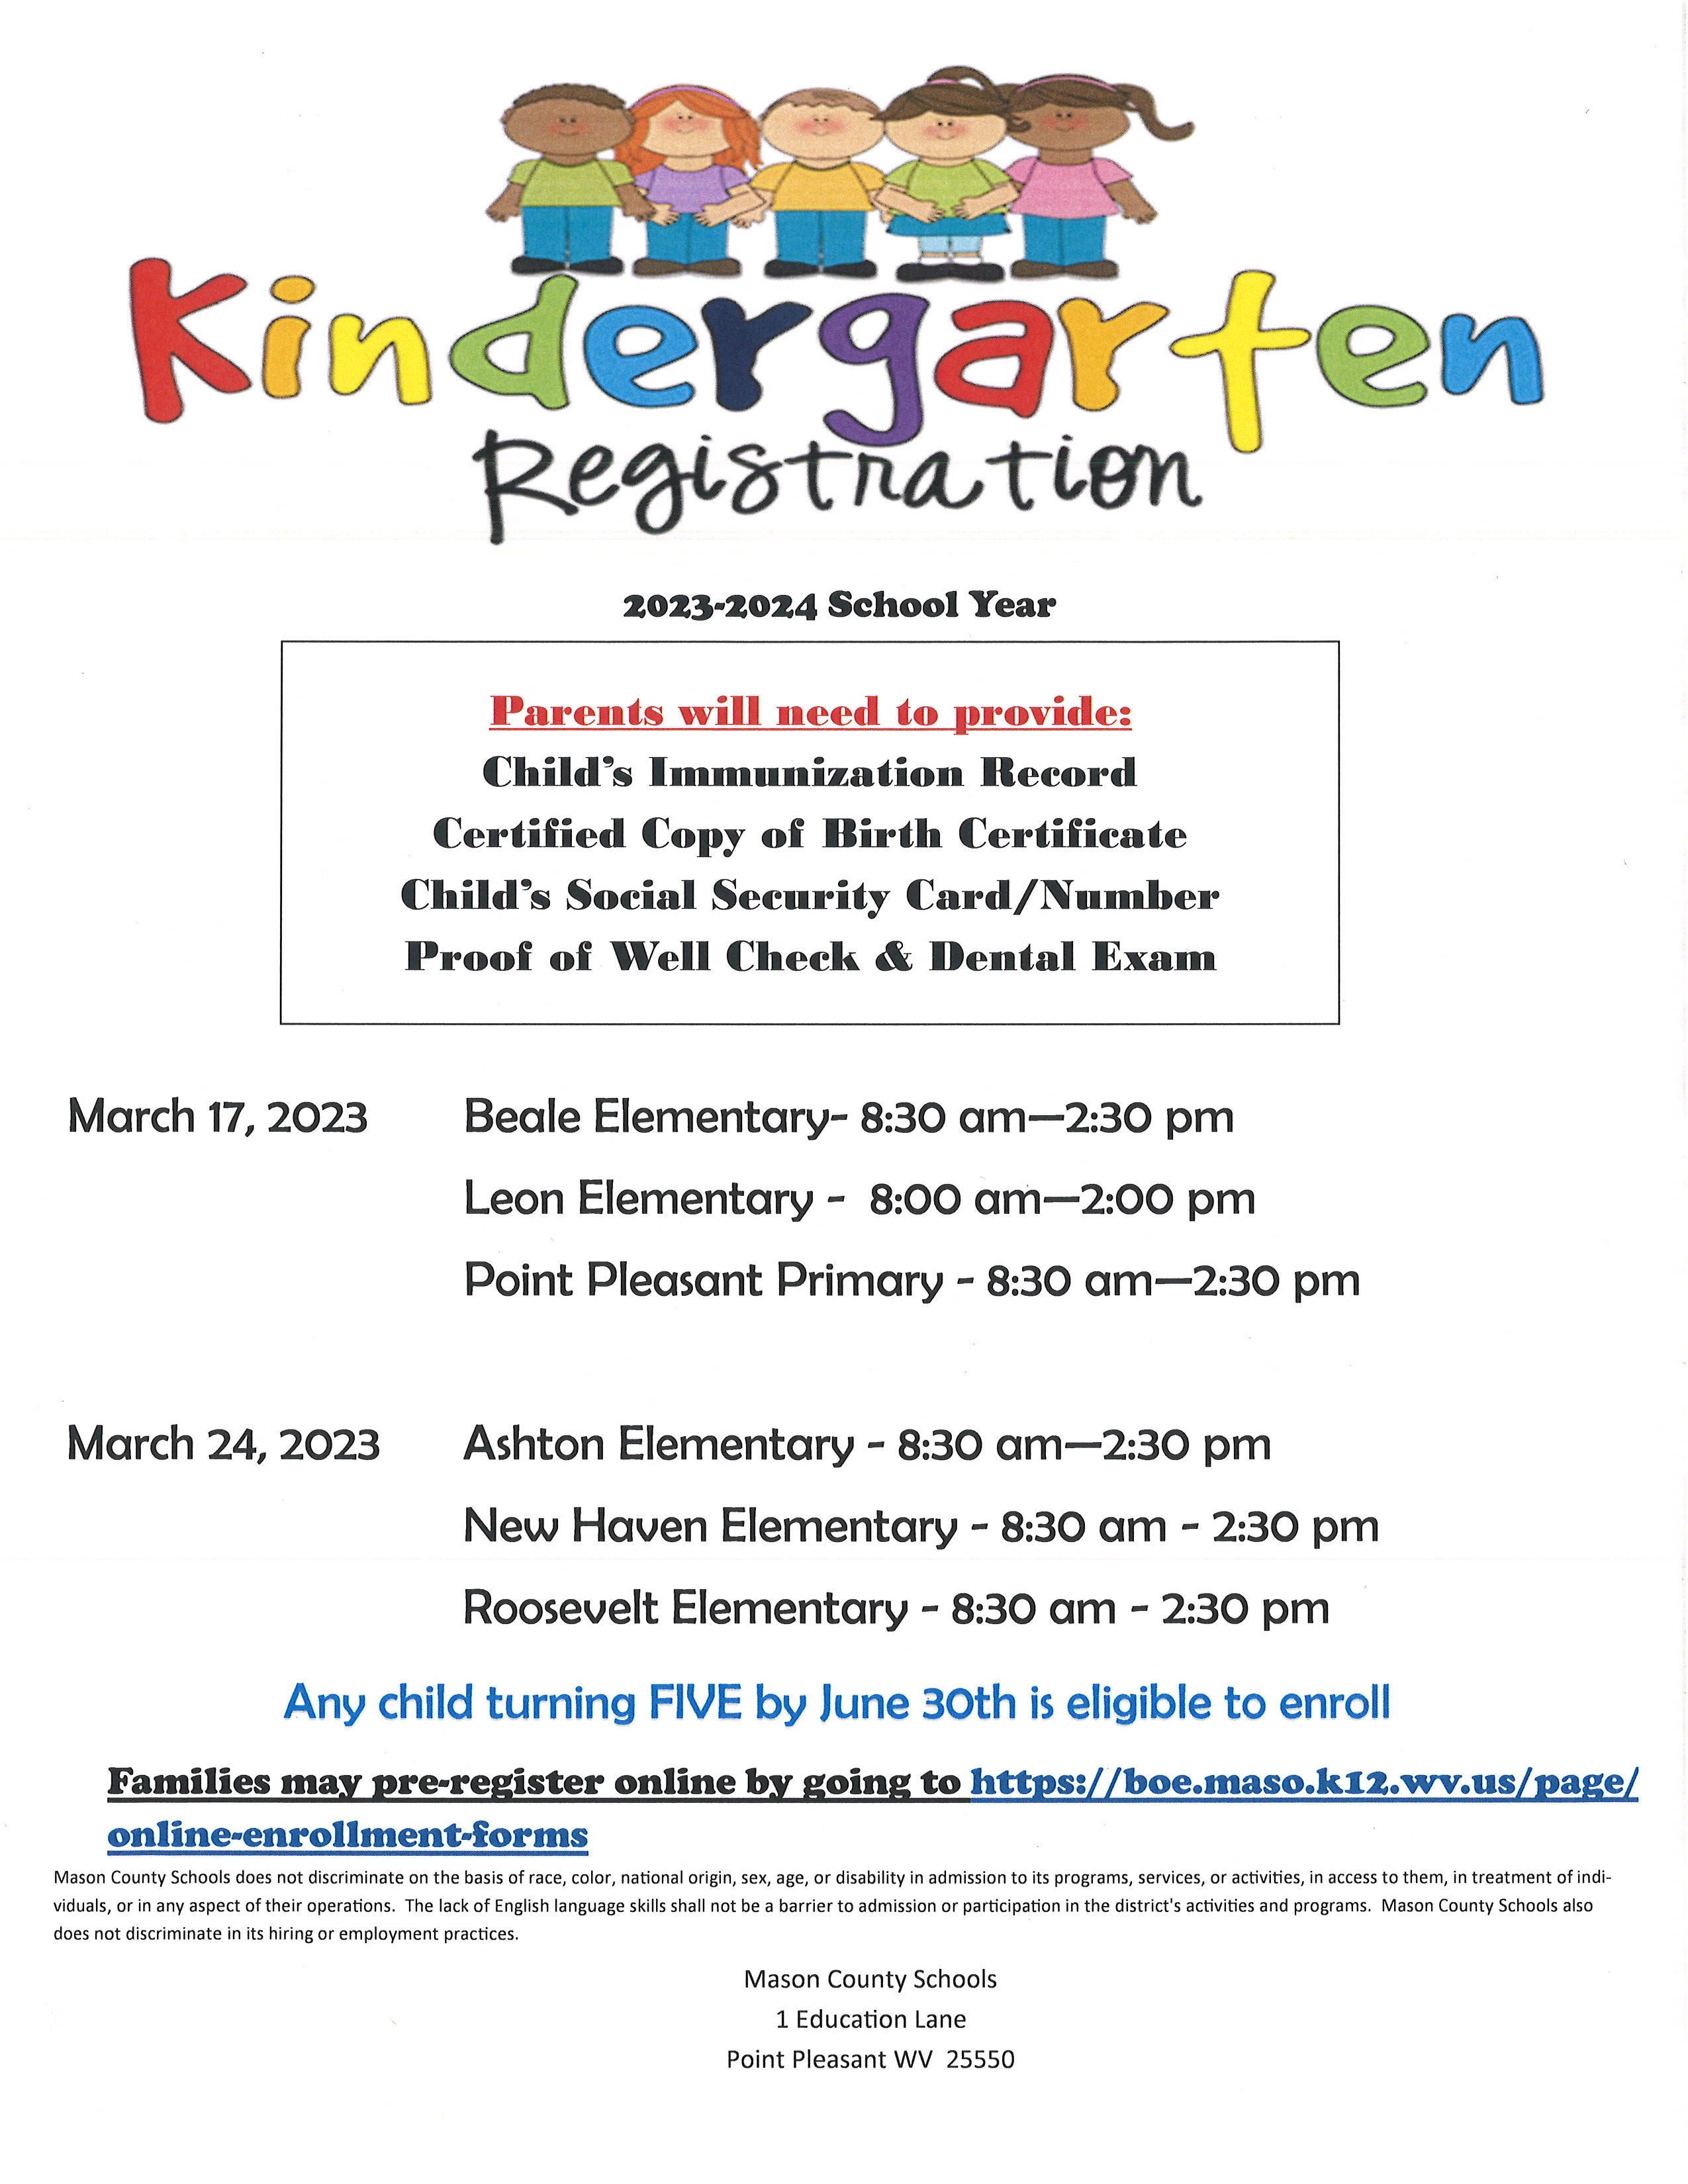 Kindergarten Registration Dates